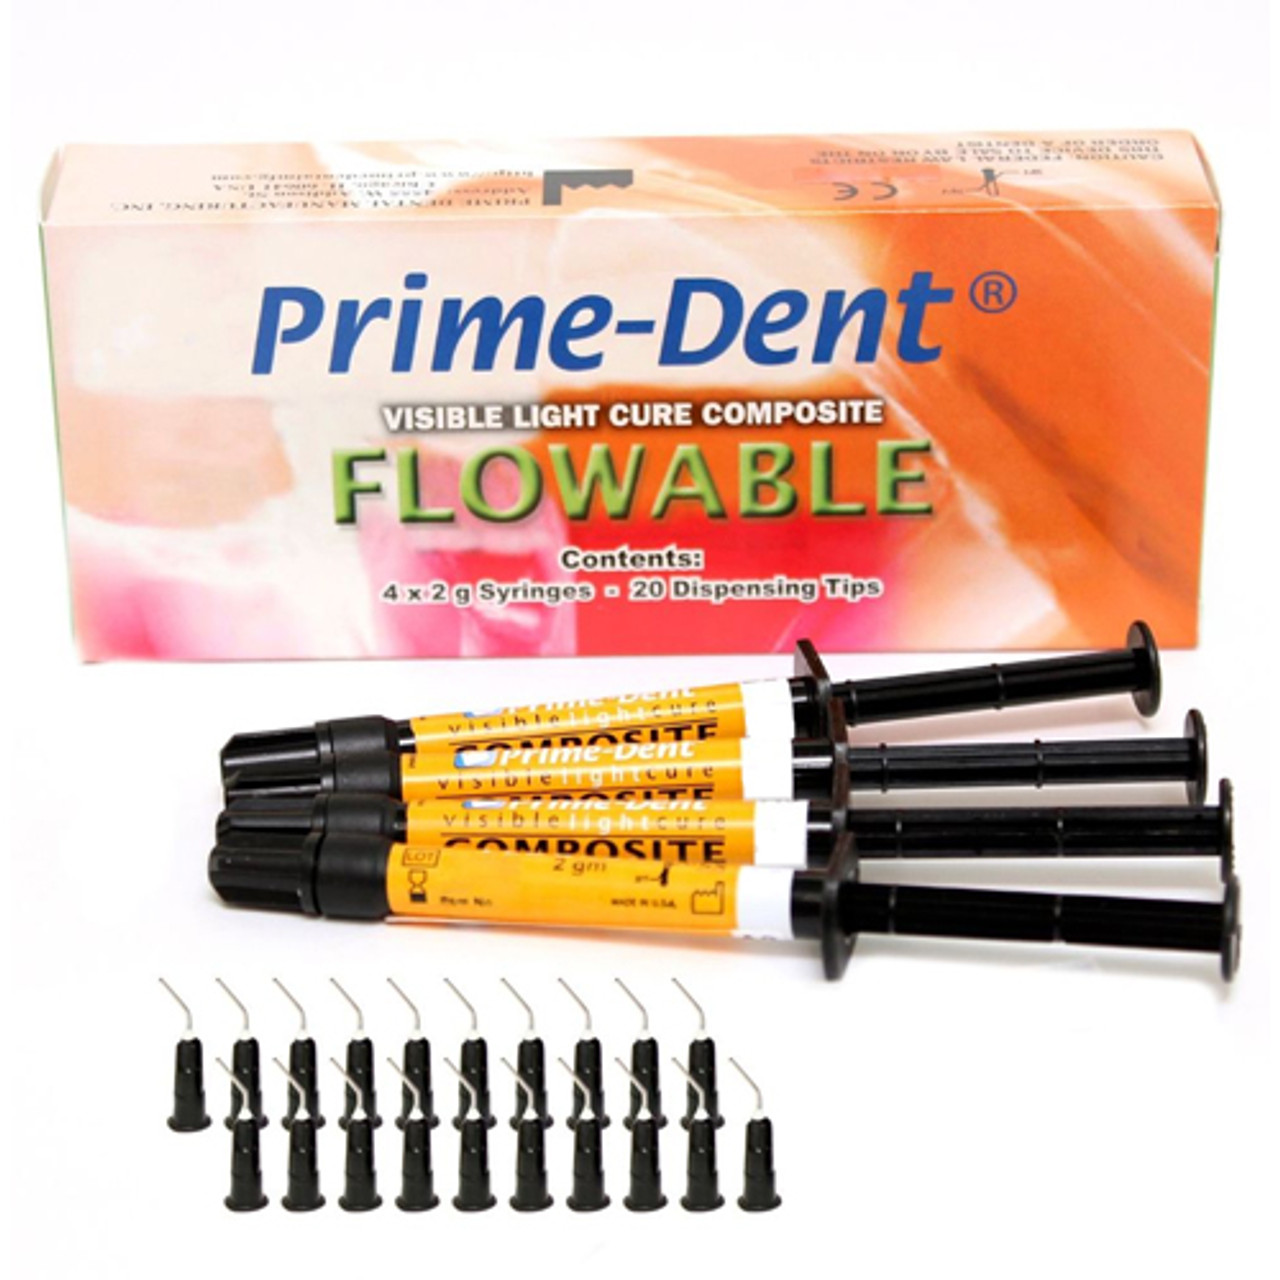 Prime-Dent Flowable Composite D3 - 4 Syringe Kit. VLC (Visible Light Cure)